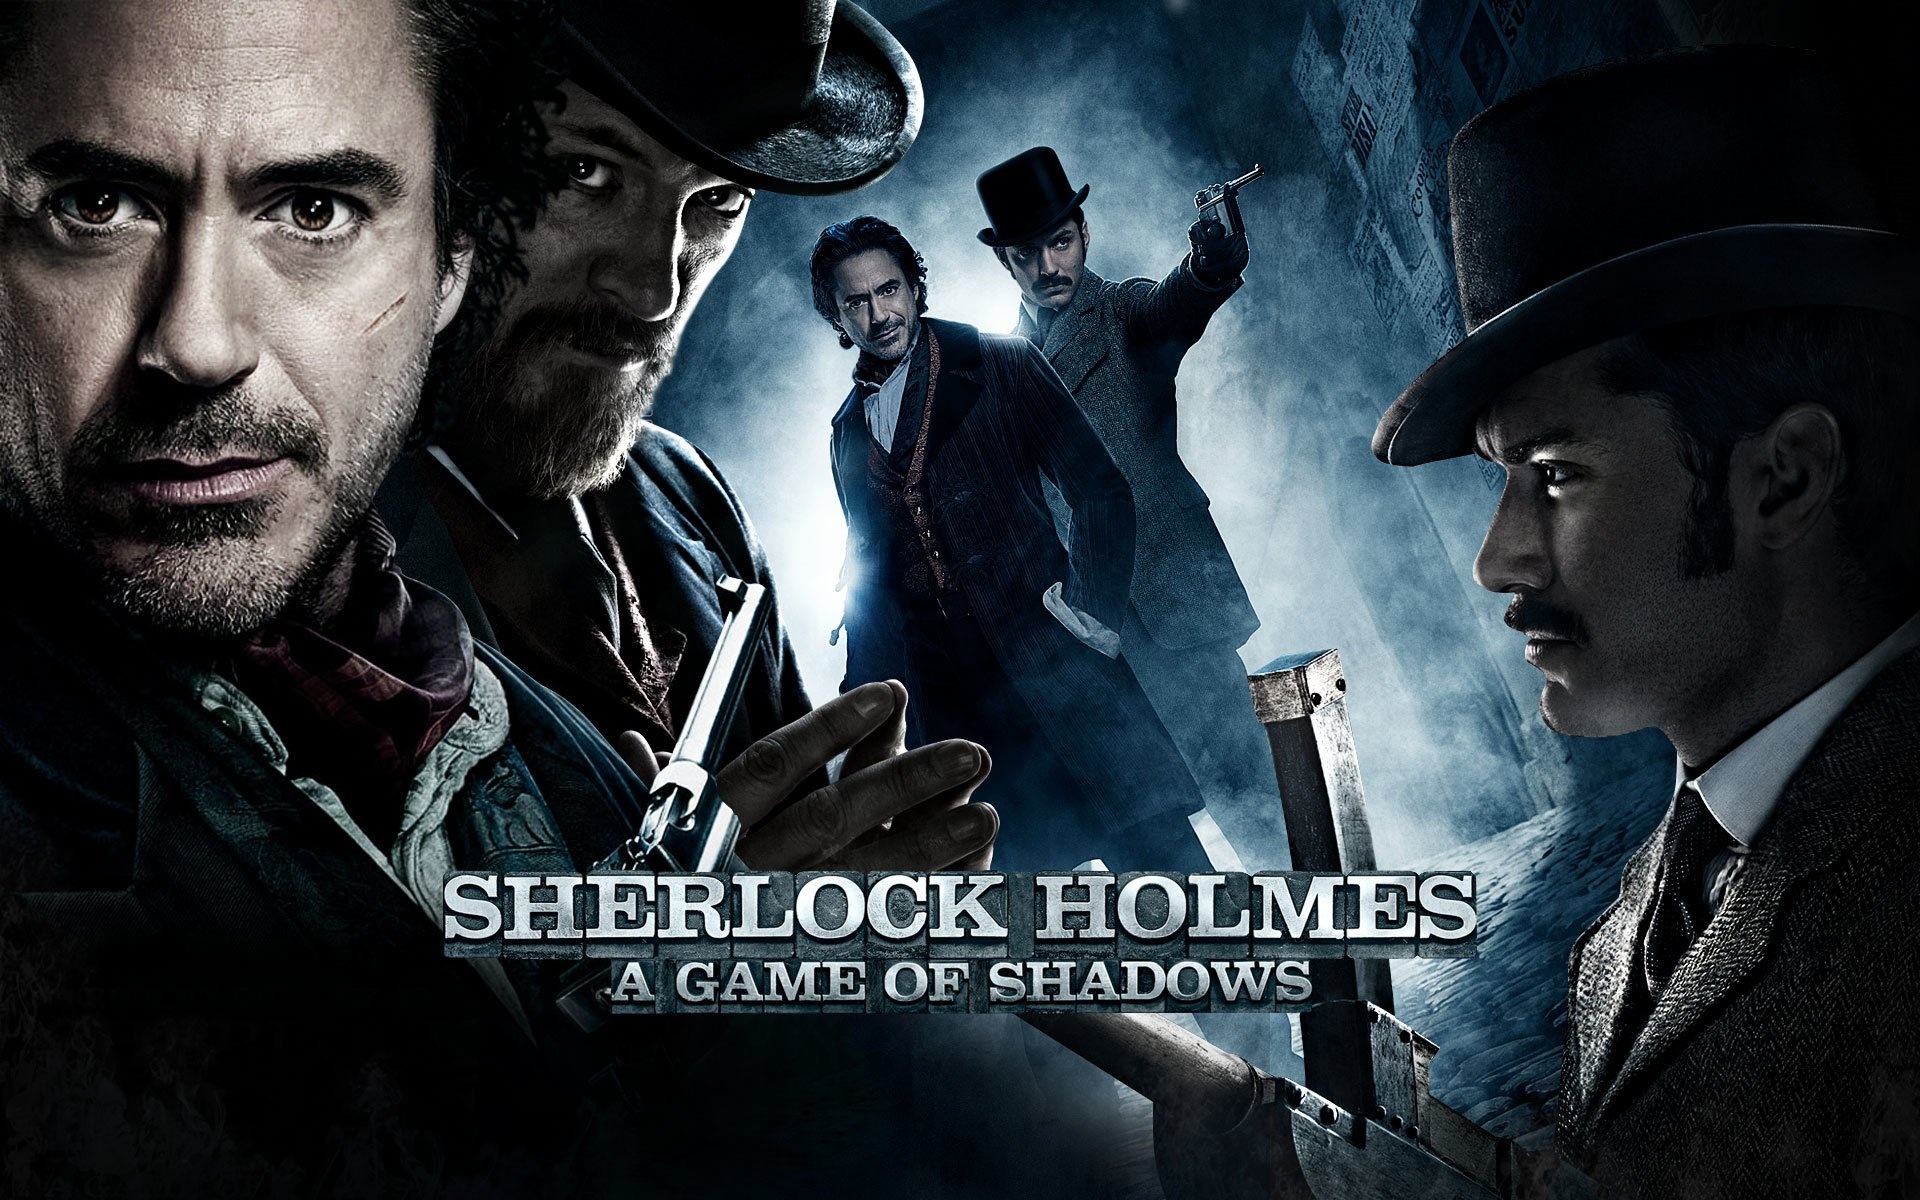 Sherlock Holmes: A Game of Shadows HD wallpaper, Detective adventure, Robert Downey Jr., Jude Law, 1920x1200 HD Desktop